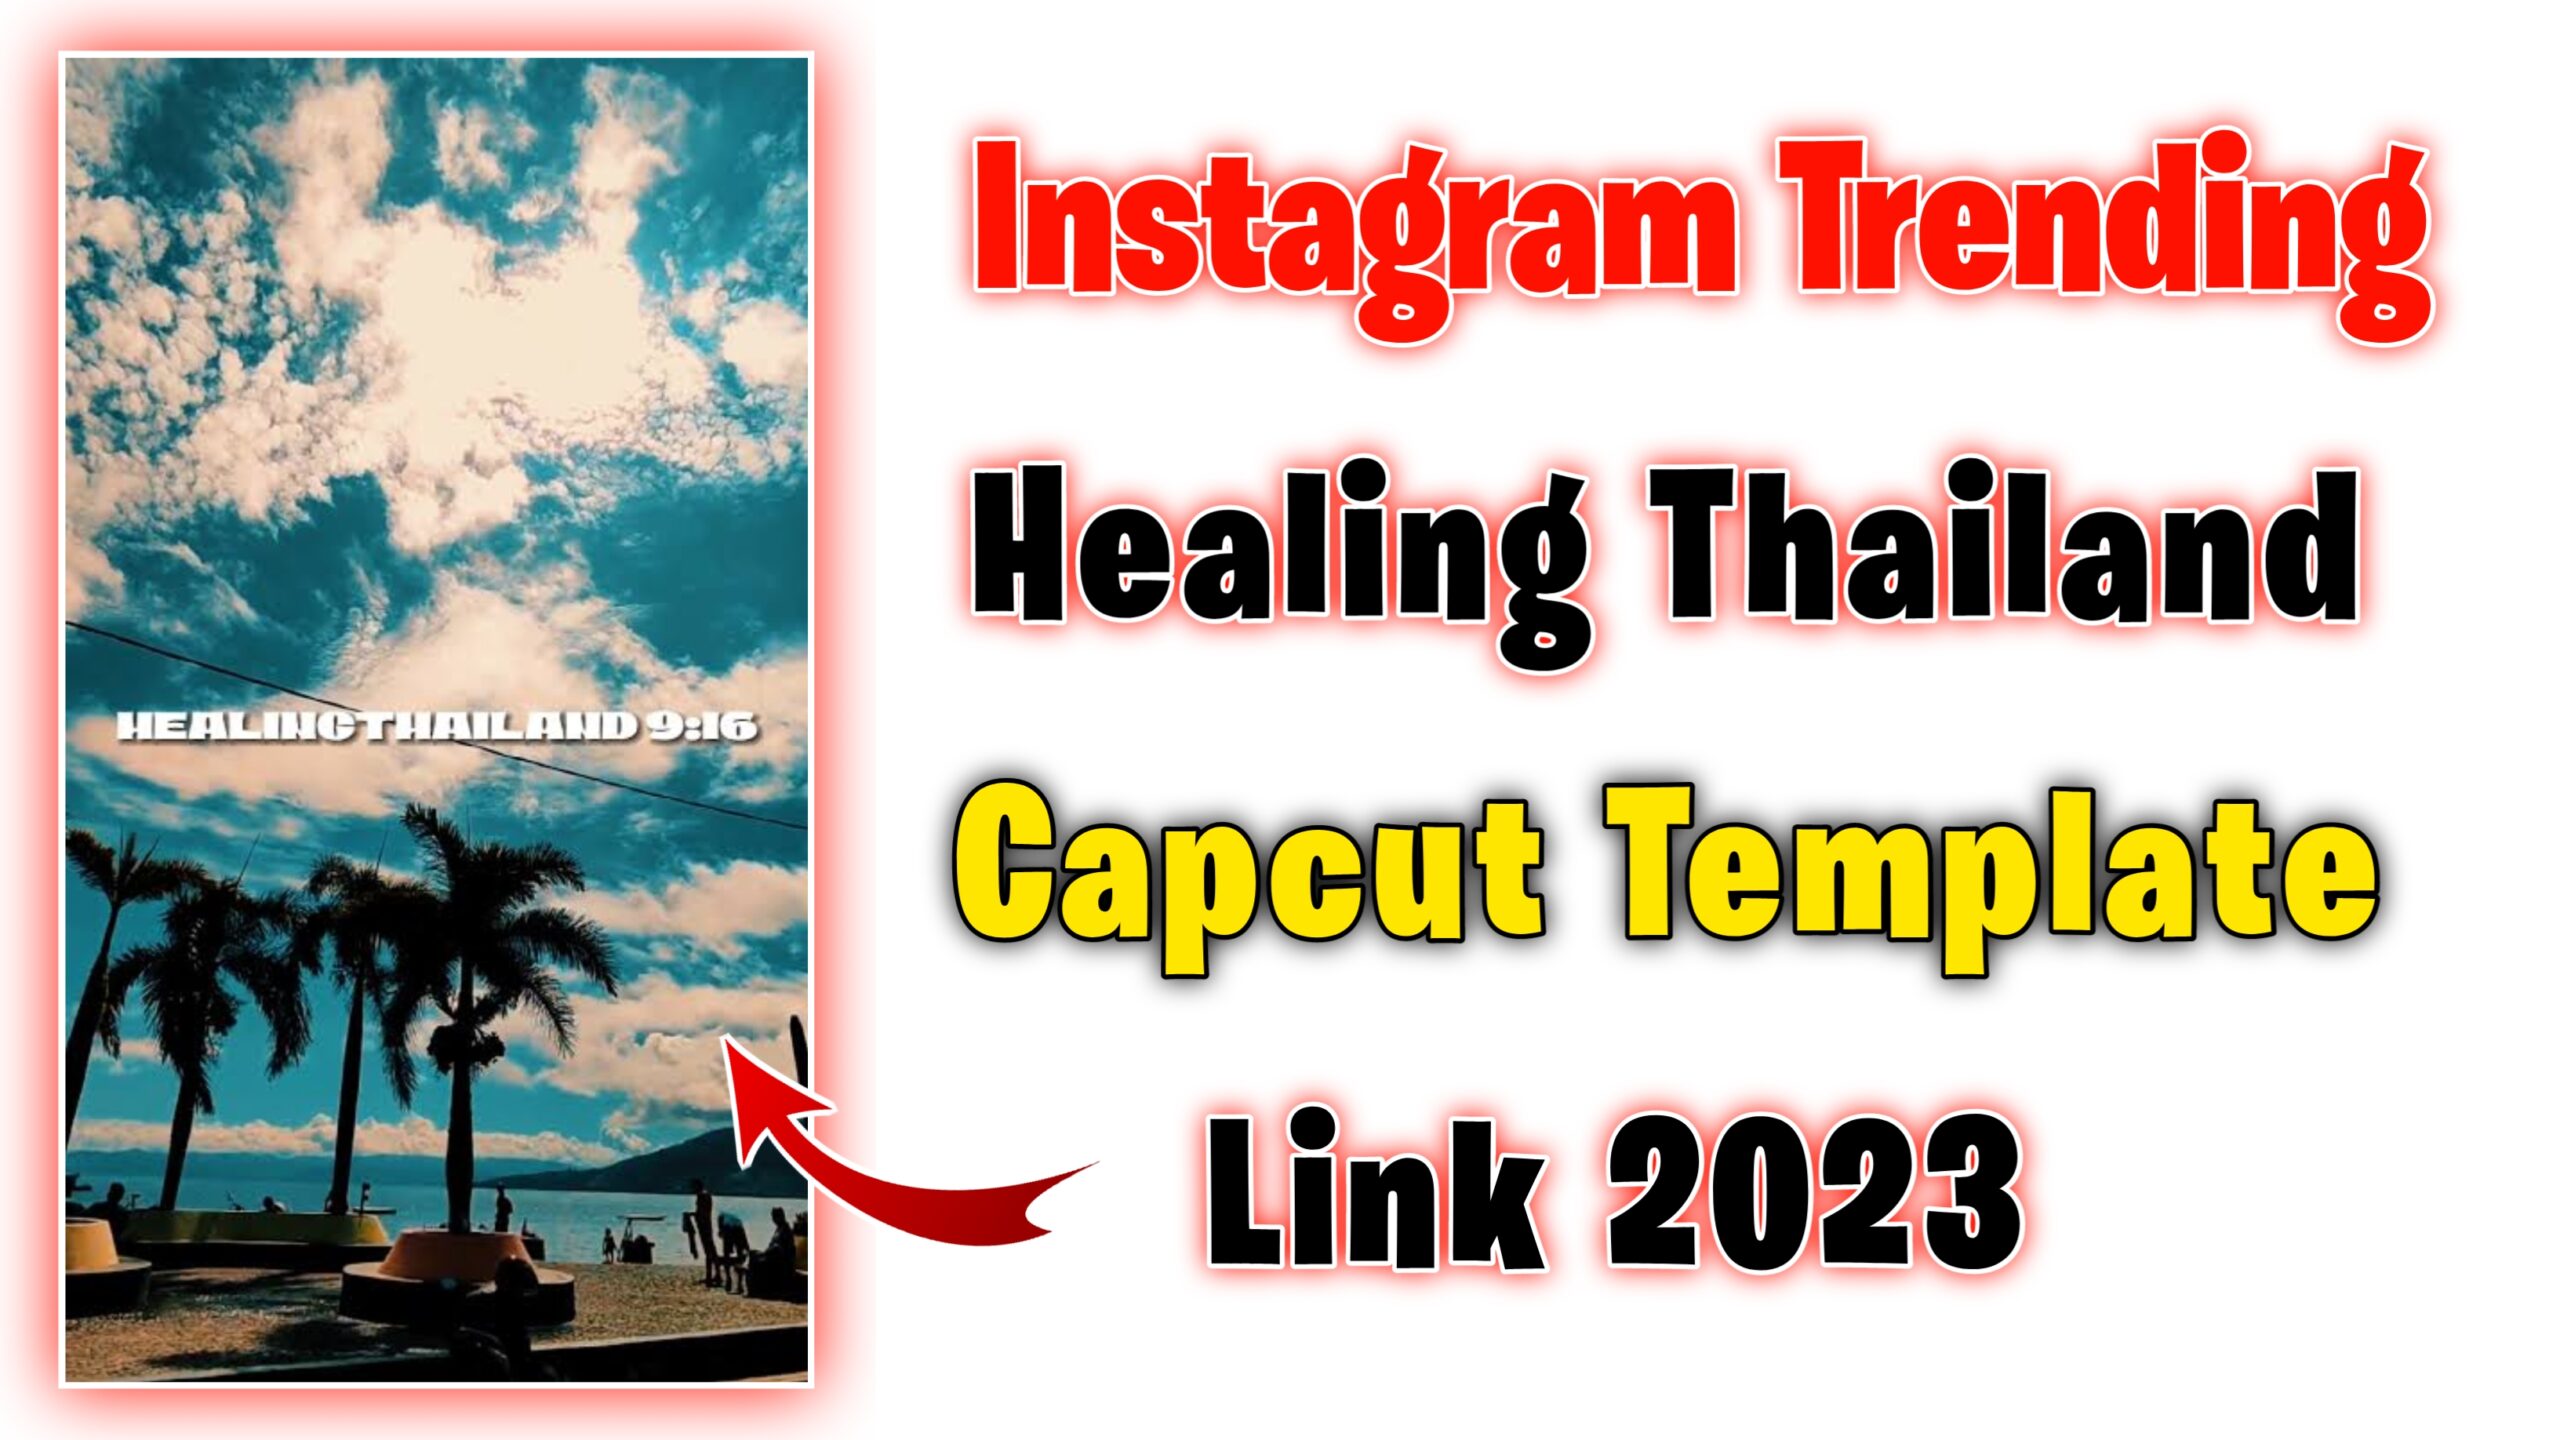 Instagram Trending Healing Thailand CapCut Template Link 2023 Tahir Editz